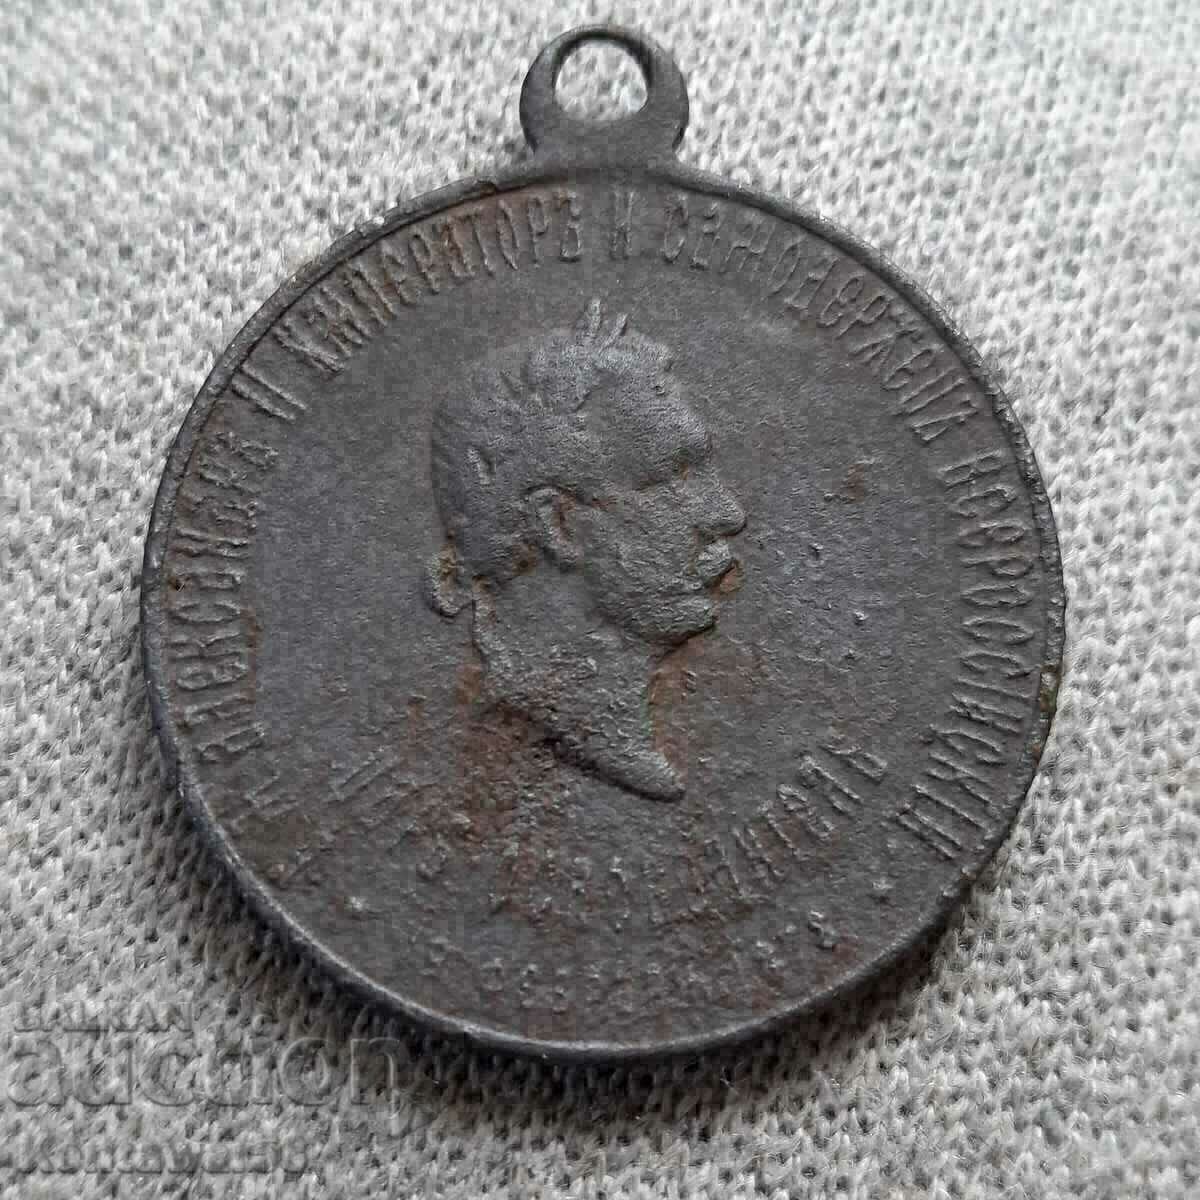 Rare "Tsar Liberator" medal from 19.02.1878.